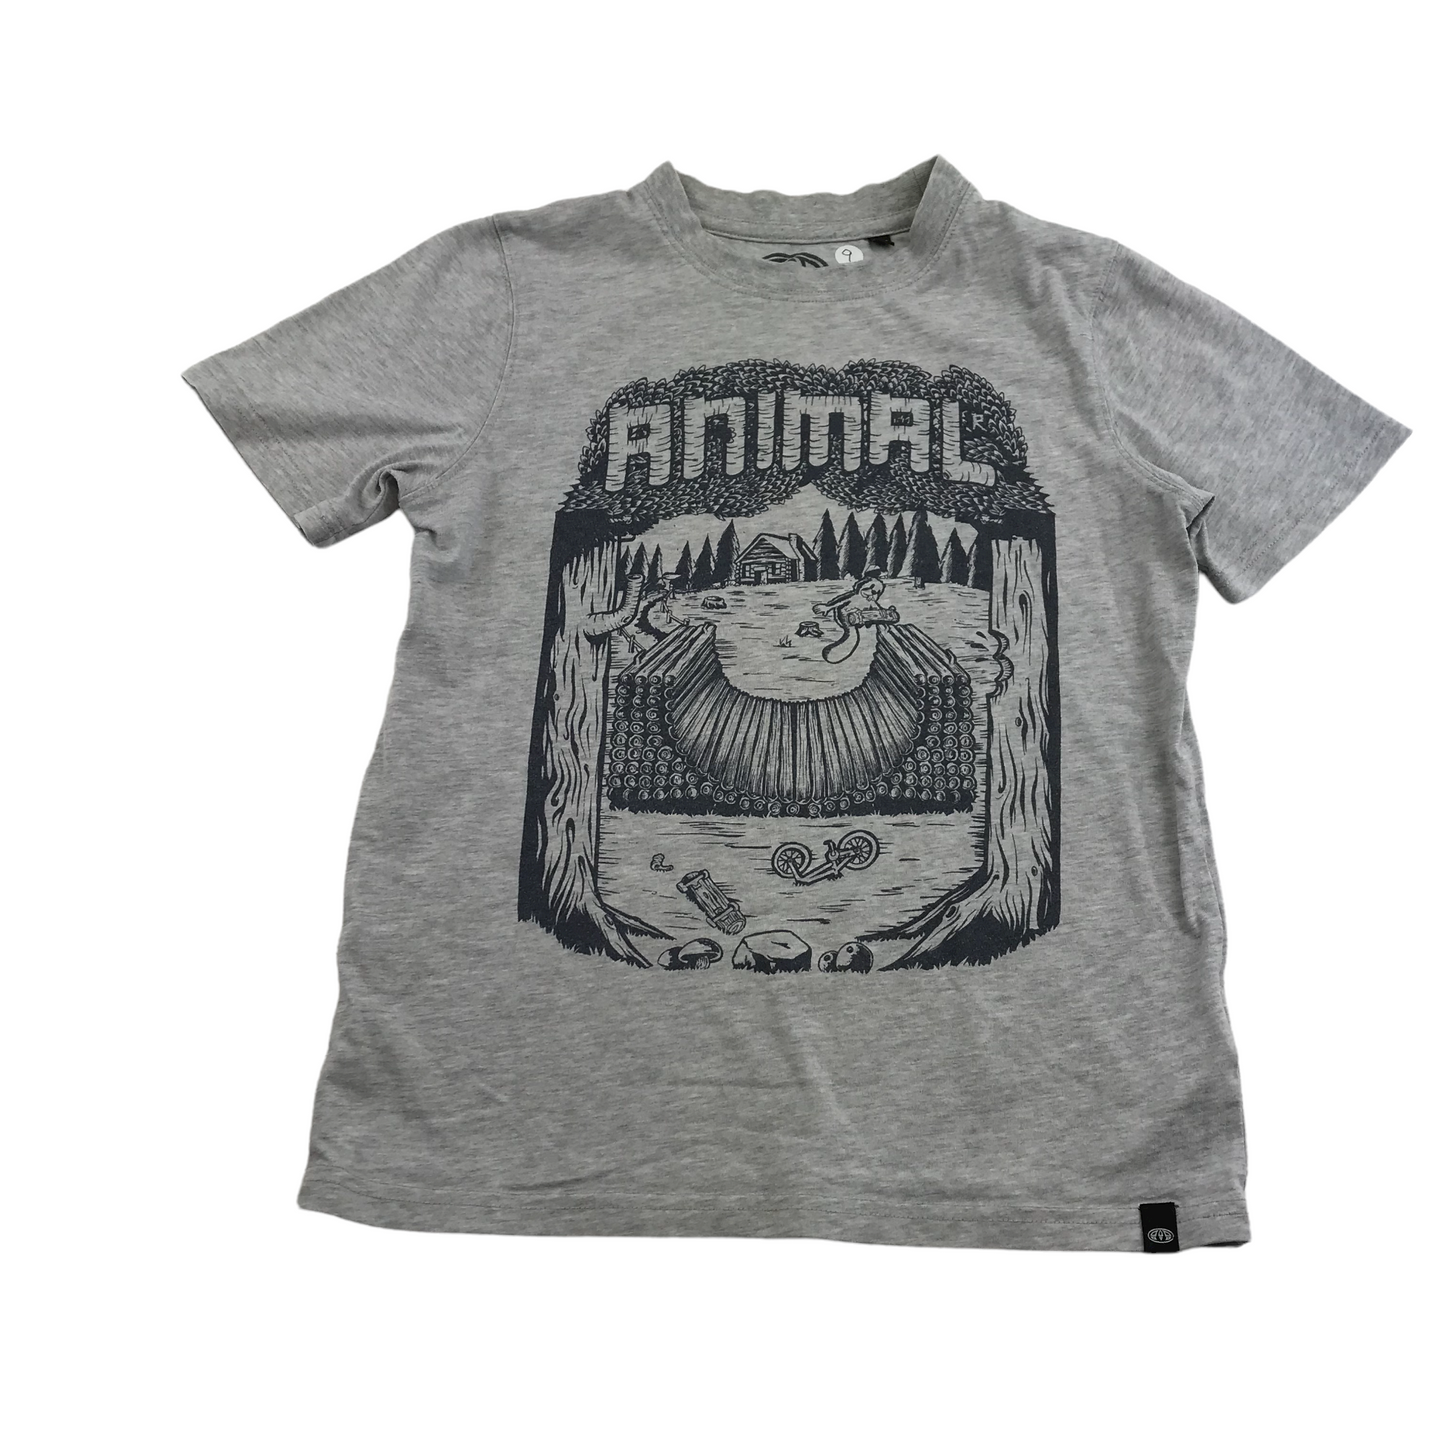 Animal Grey Graphic T-shirt Age 9